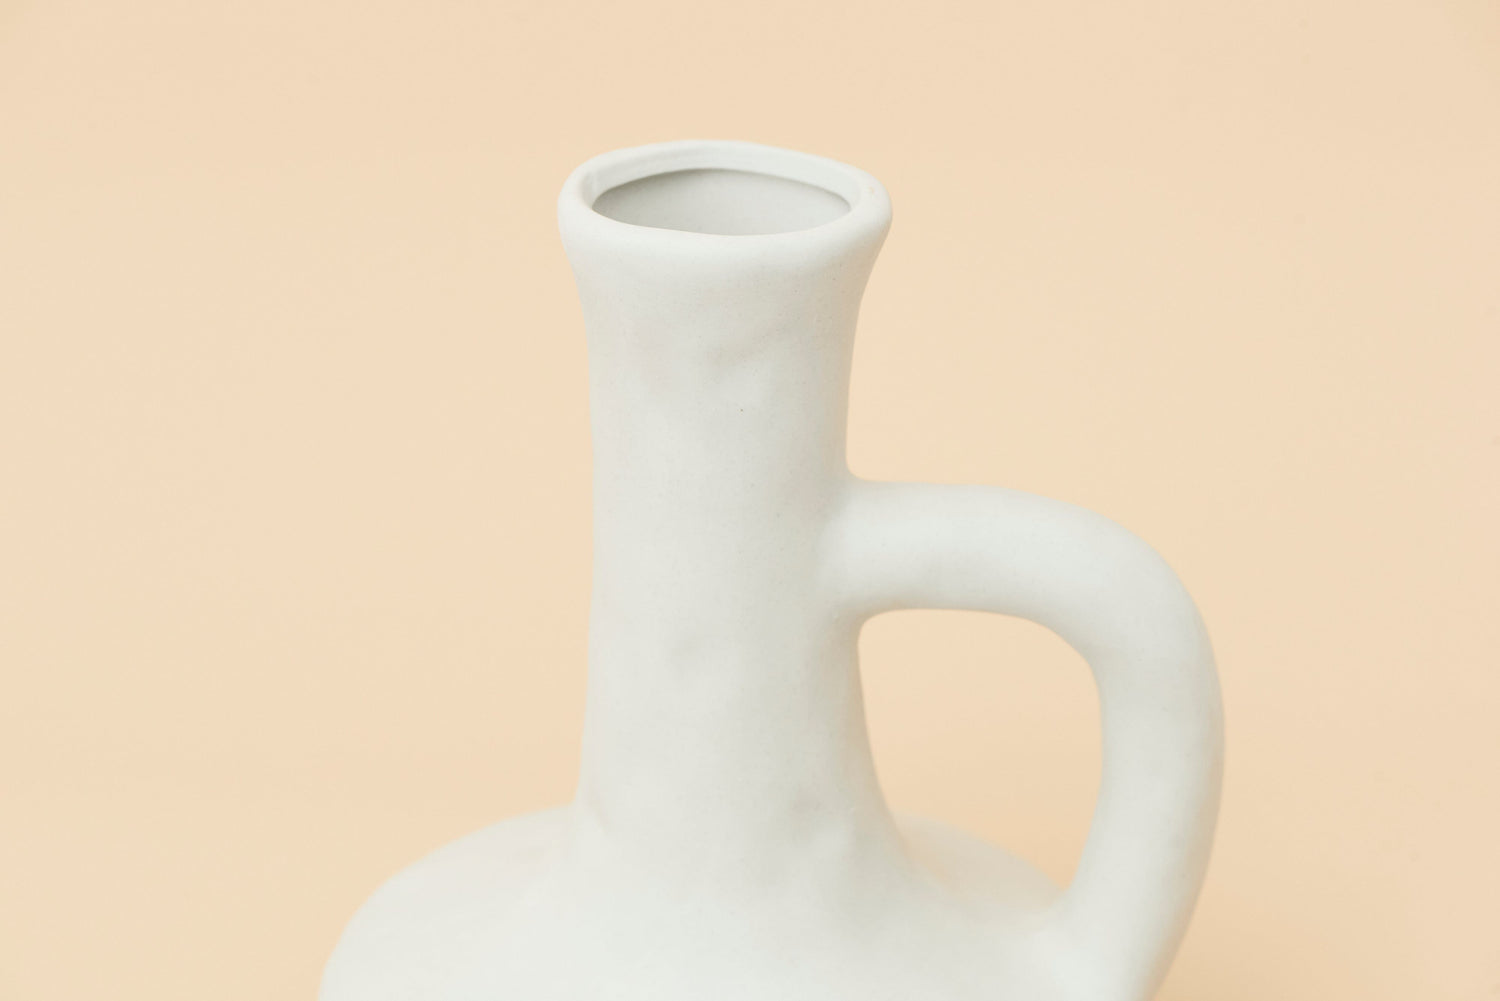 Pullen and Co Home Decor Chantelle - Candelabra Organic Vase (7641527484587)